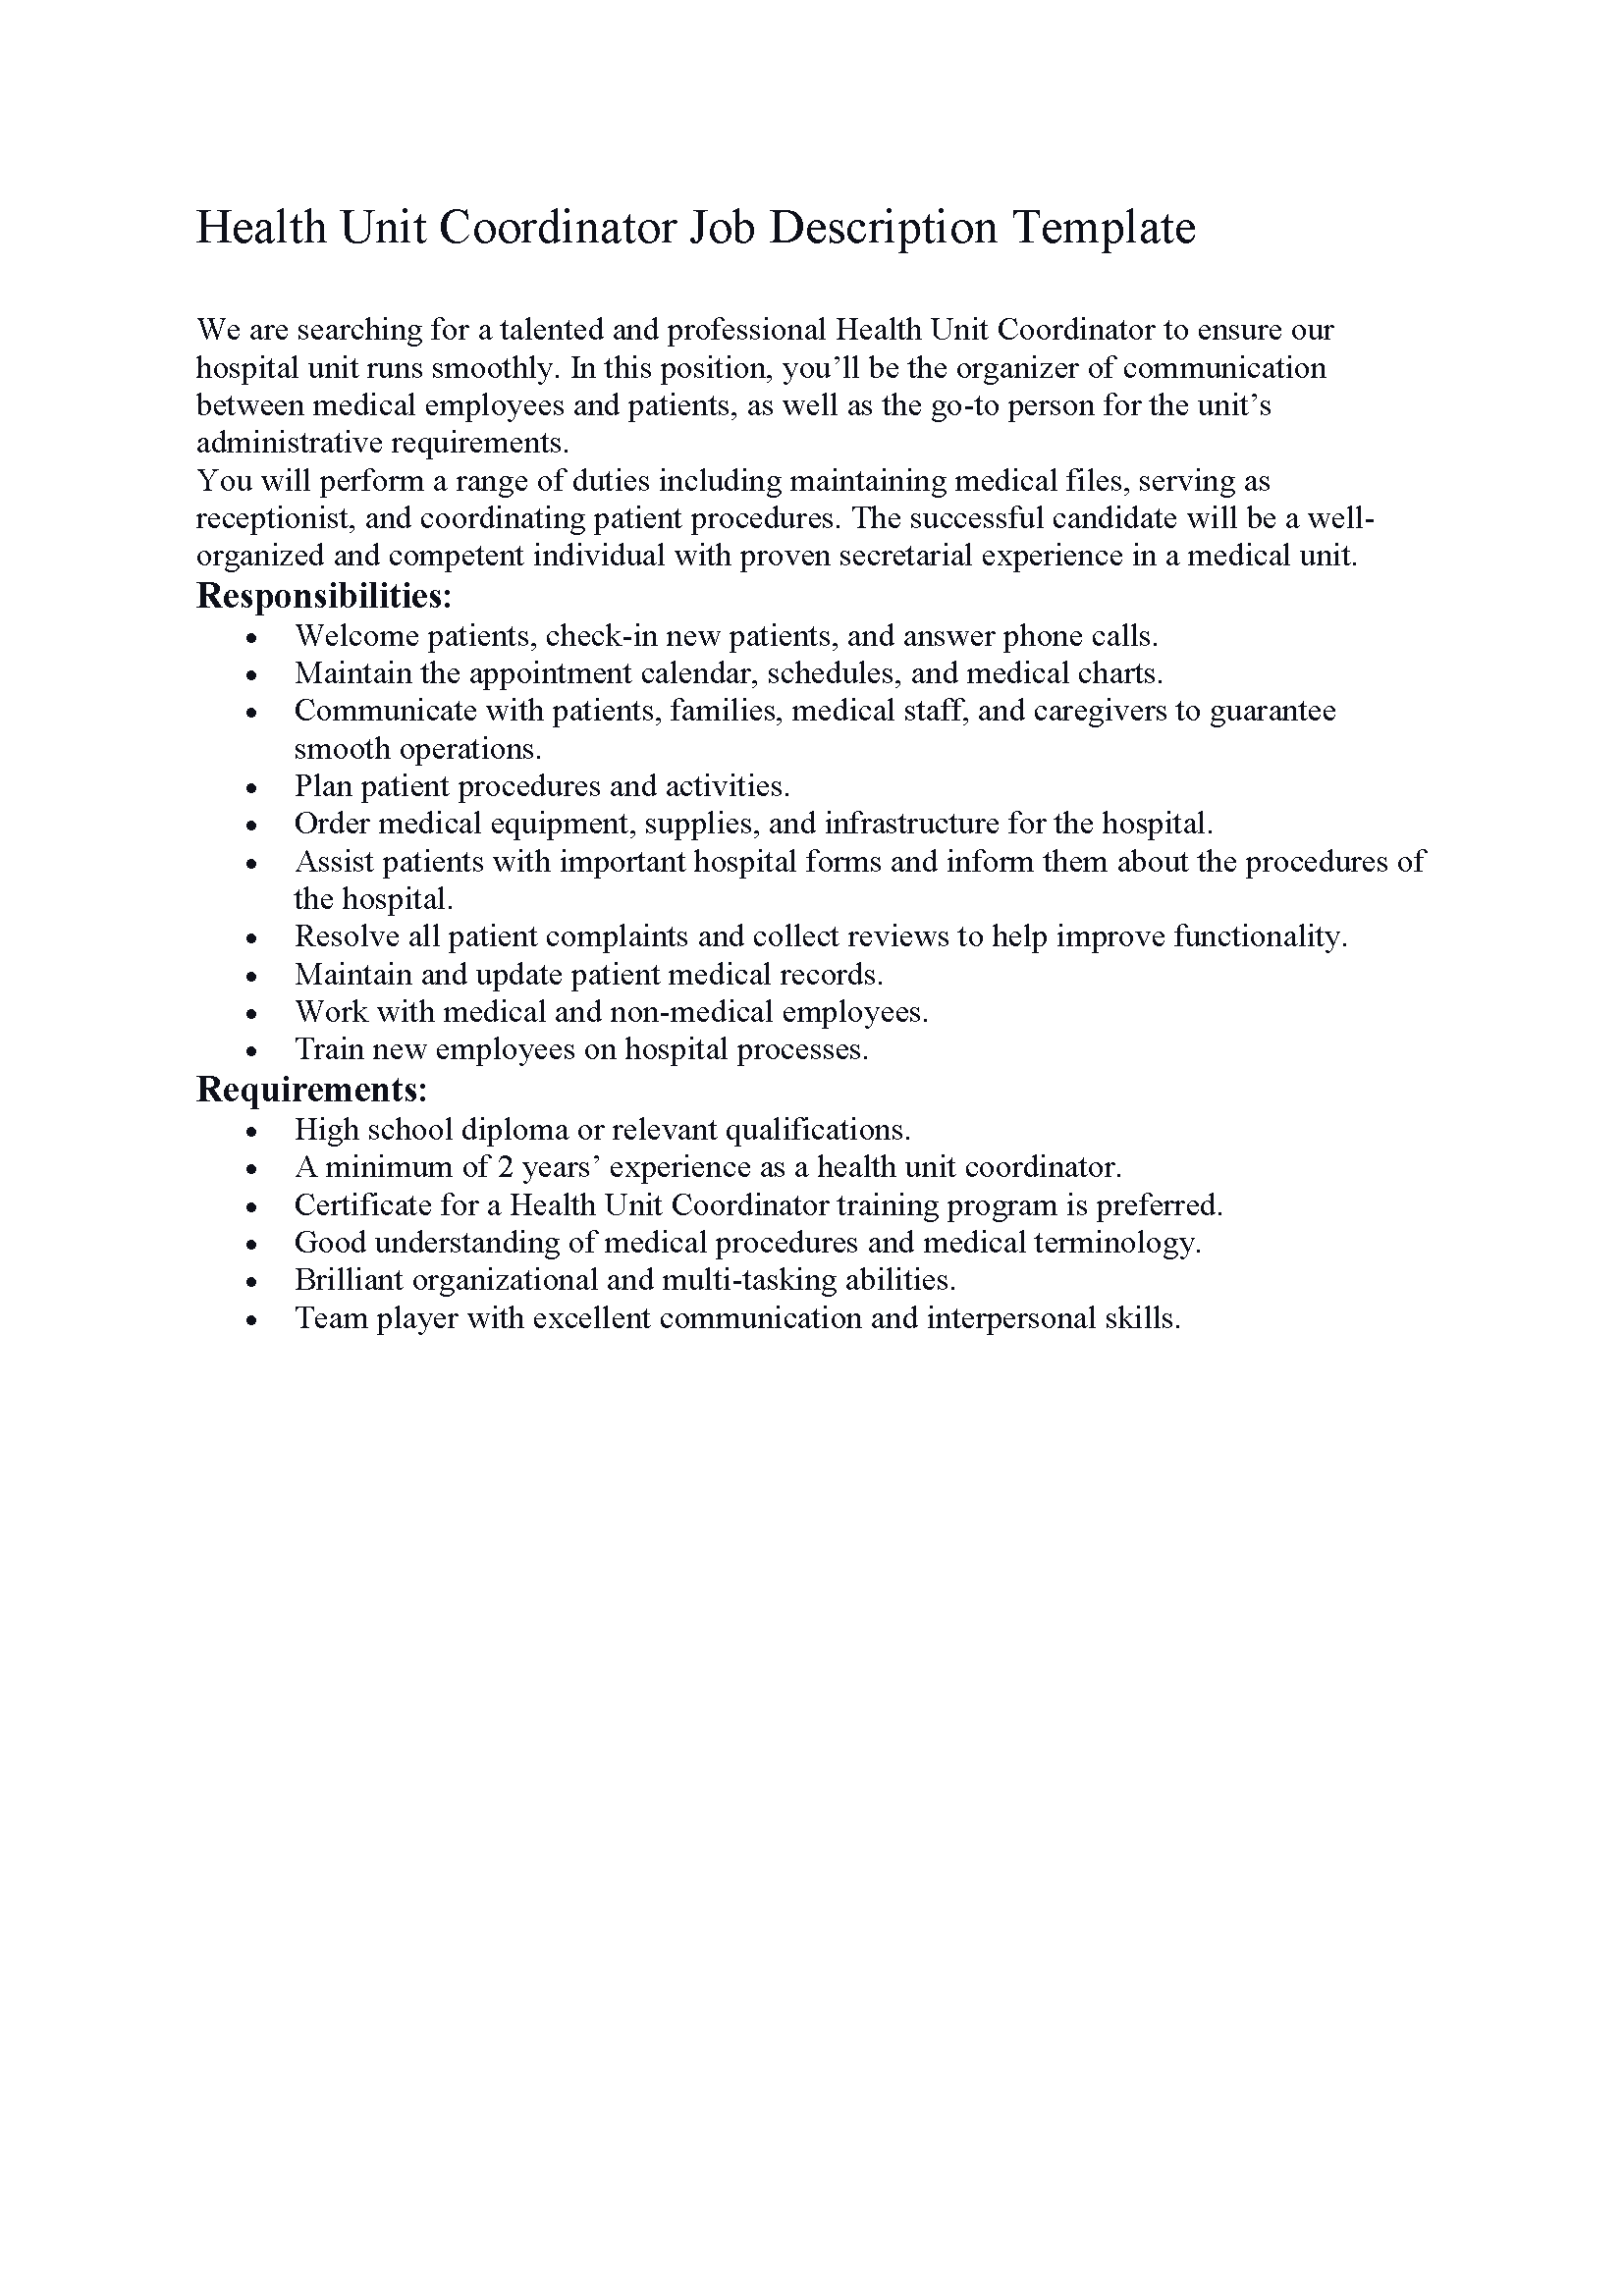 Health Unit Coordinator Job Description Template